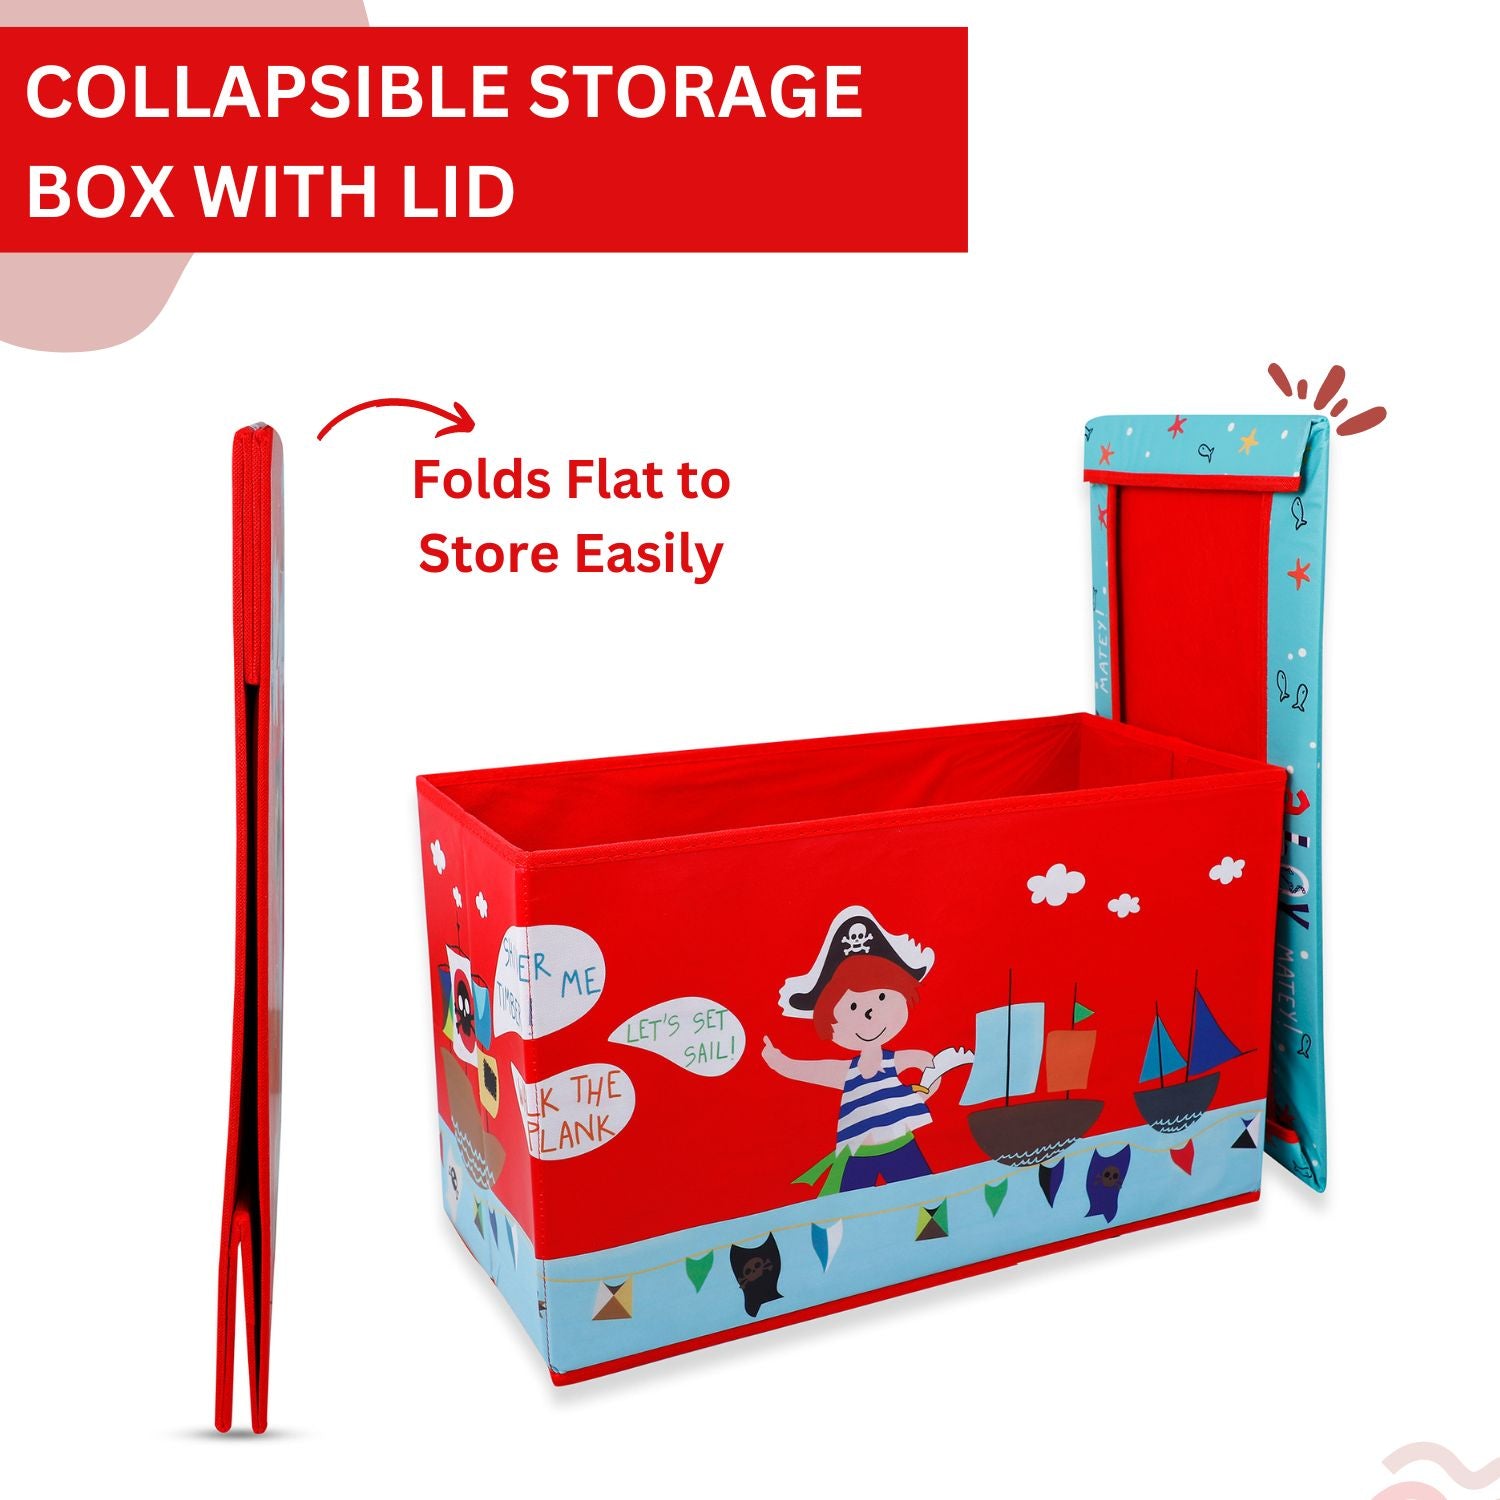 Baby Moo Treasure Hunt Large Multifunctional Playroom Storage Box - Red